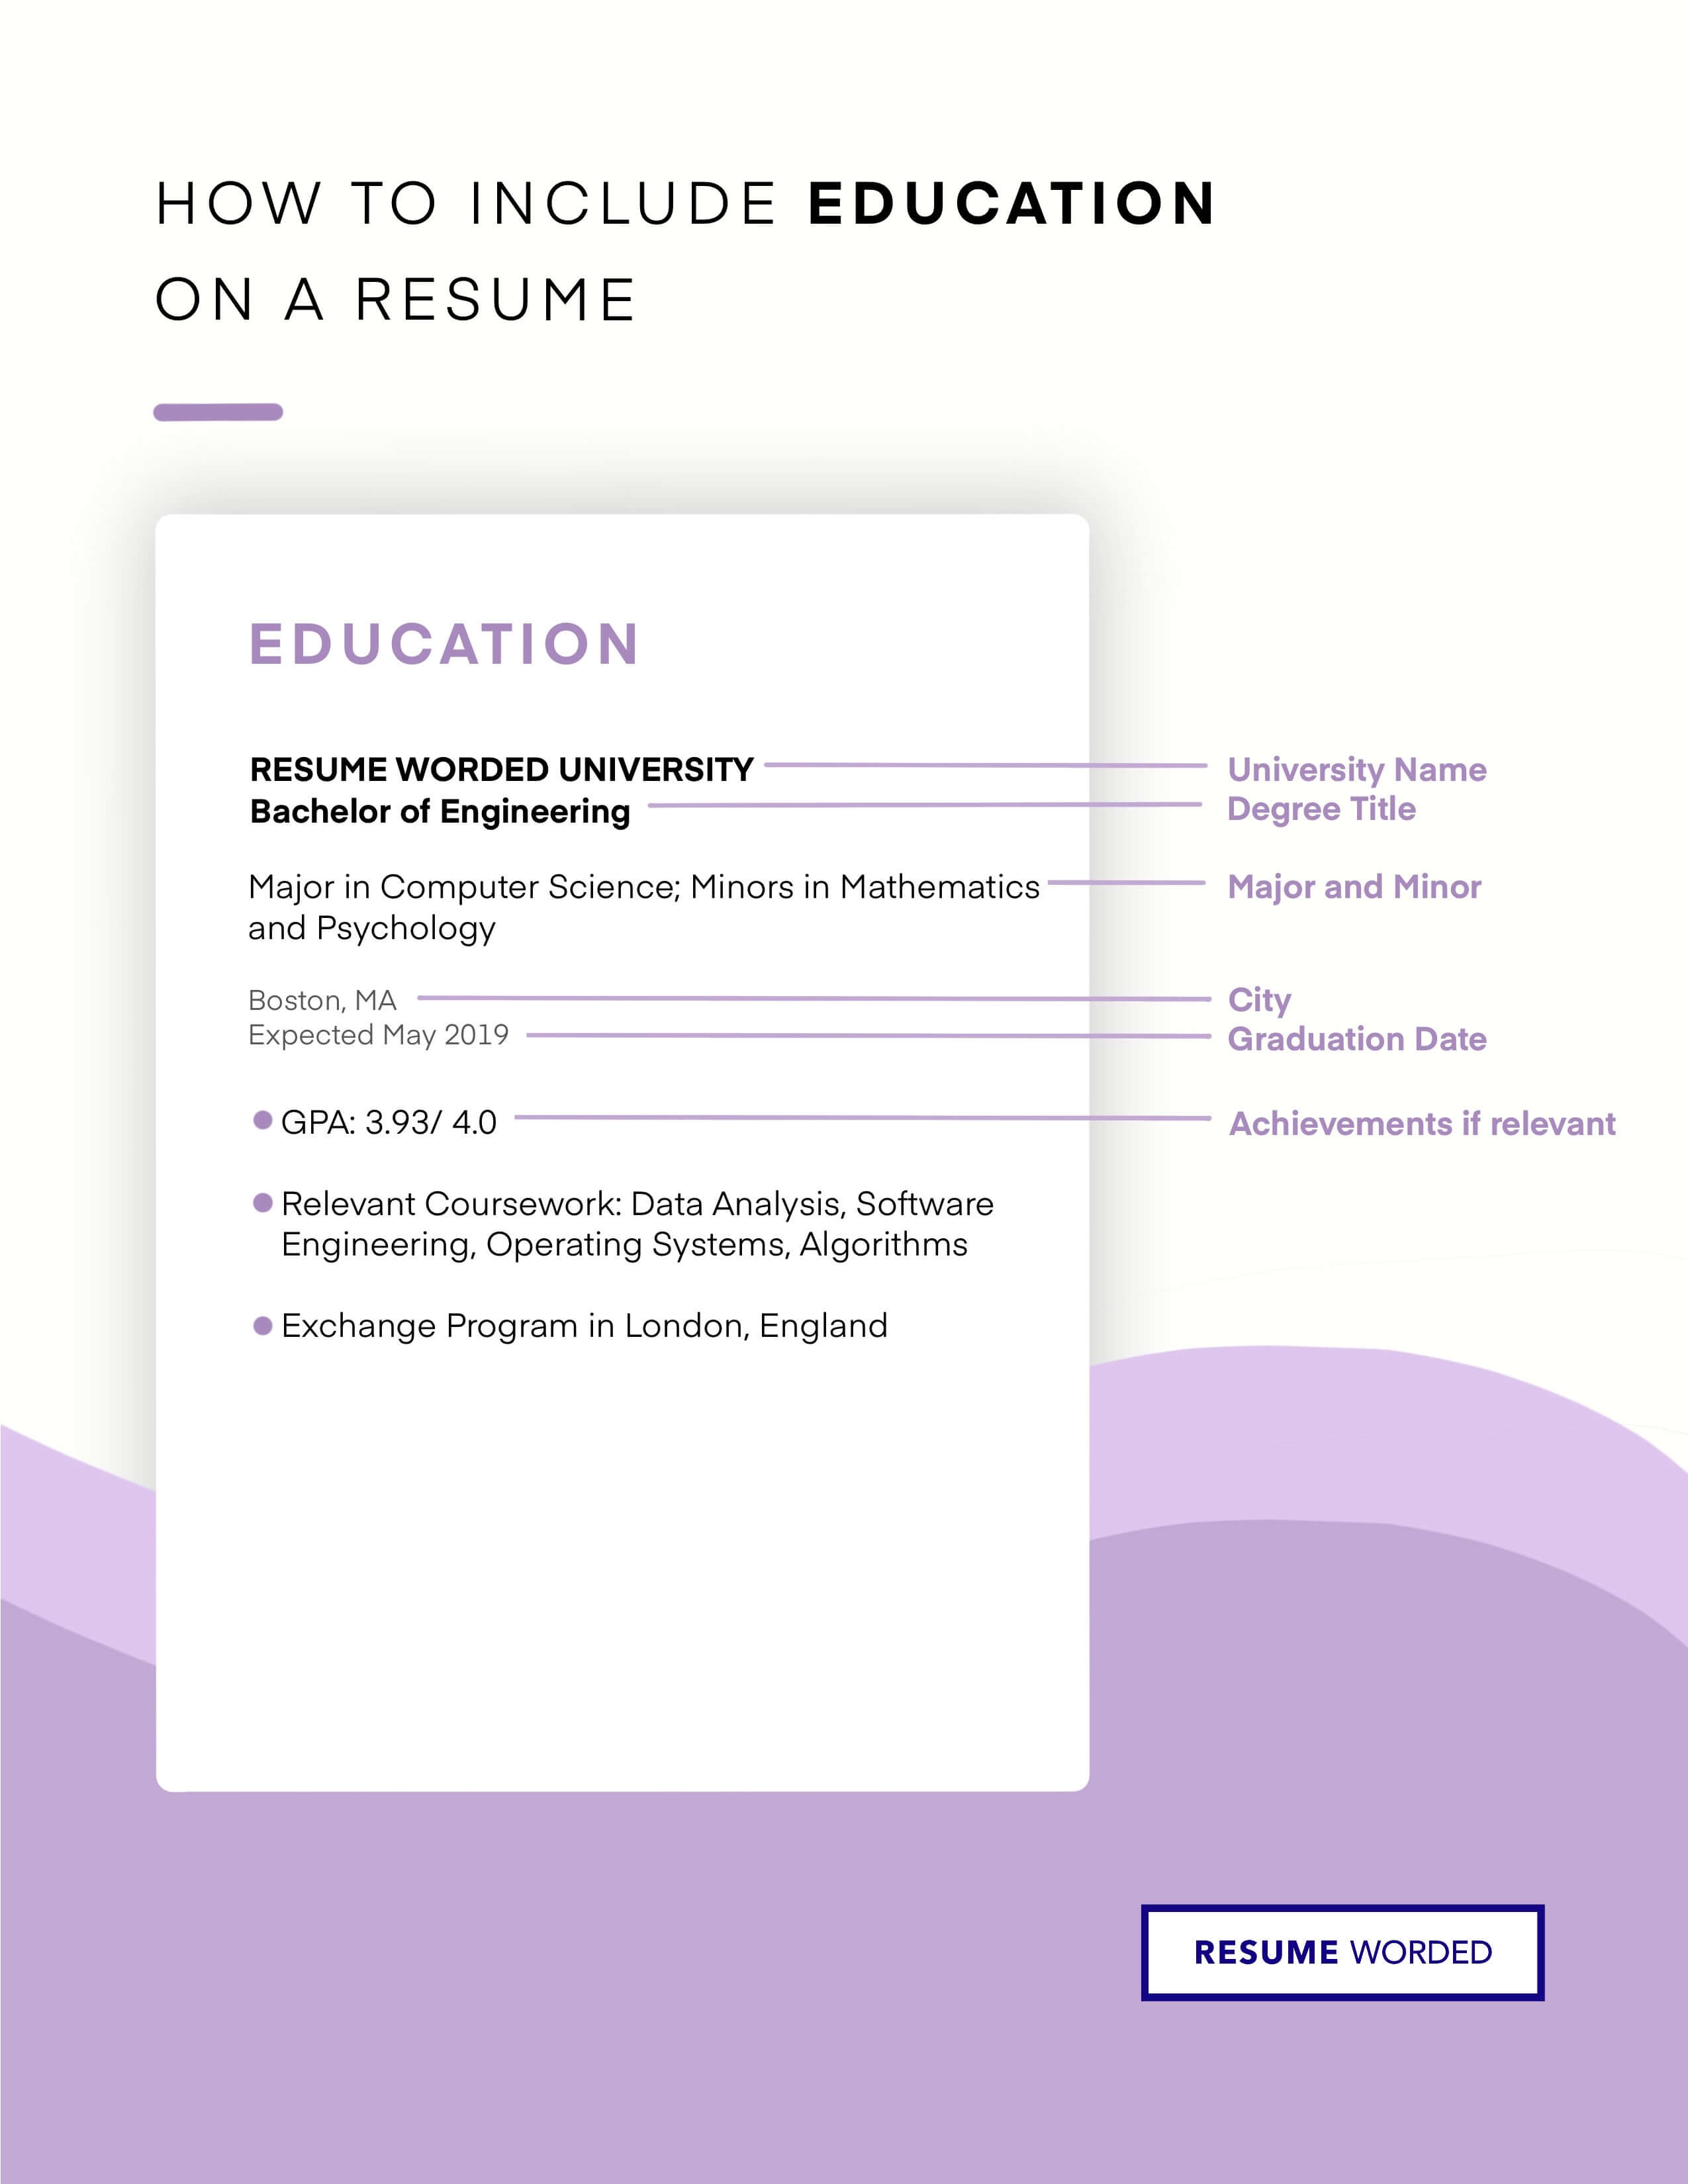 Emphasis on education - Entry-Level (Free) Resume